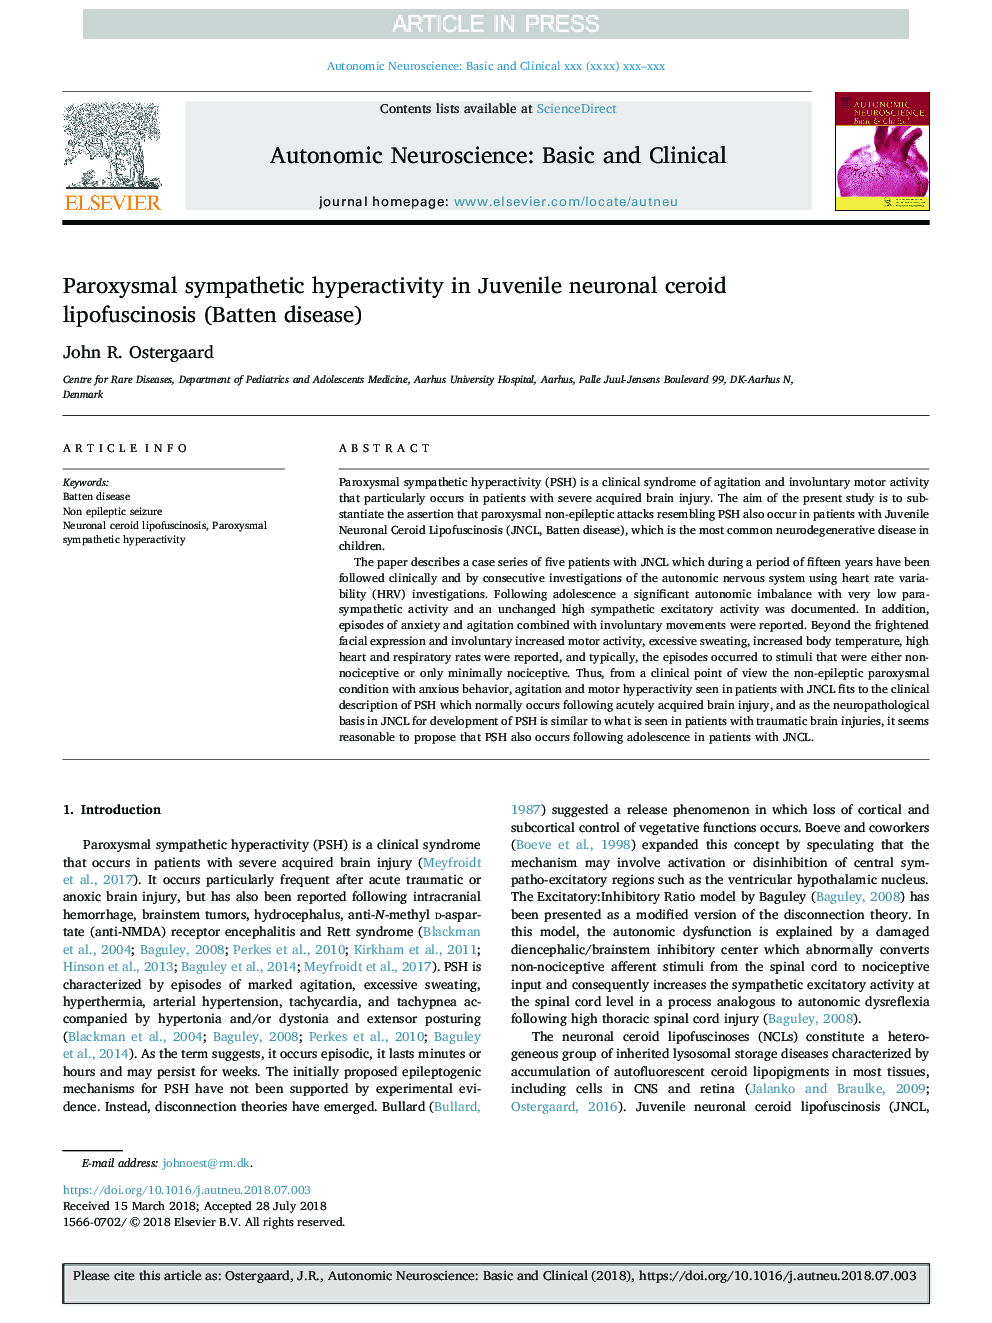 Paroxysmal sympathetic hyperactivity in Juvenile neuronal ceroid lipofuscinosis (Batten disease)